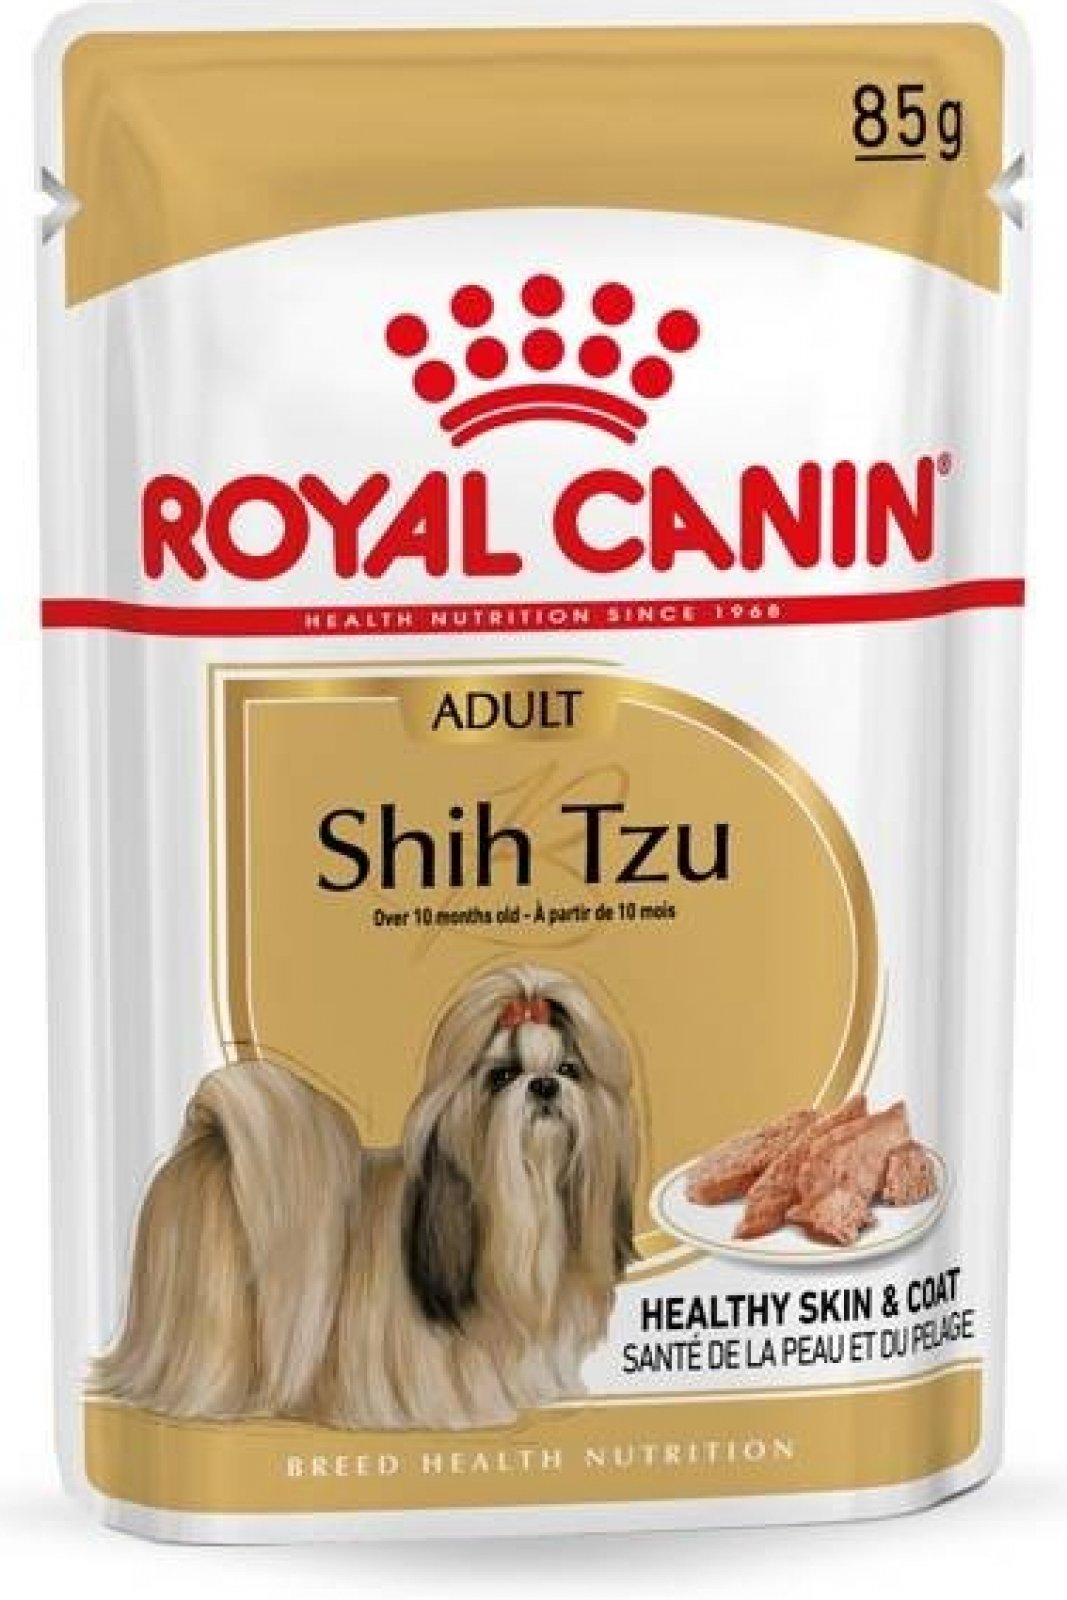 Royal Canin Breed Shih Tzu Adult 12x85g